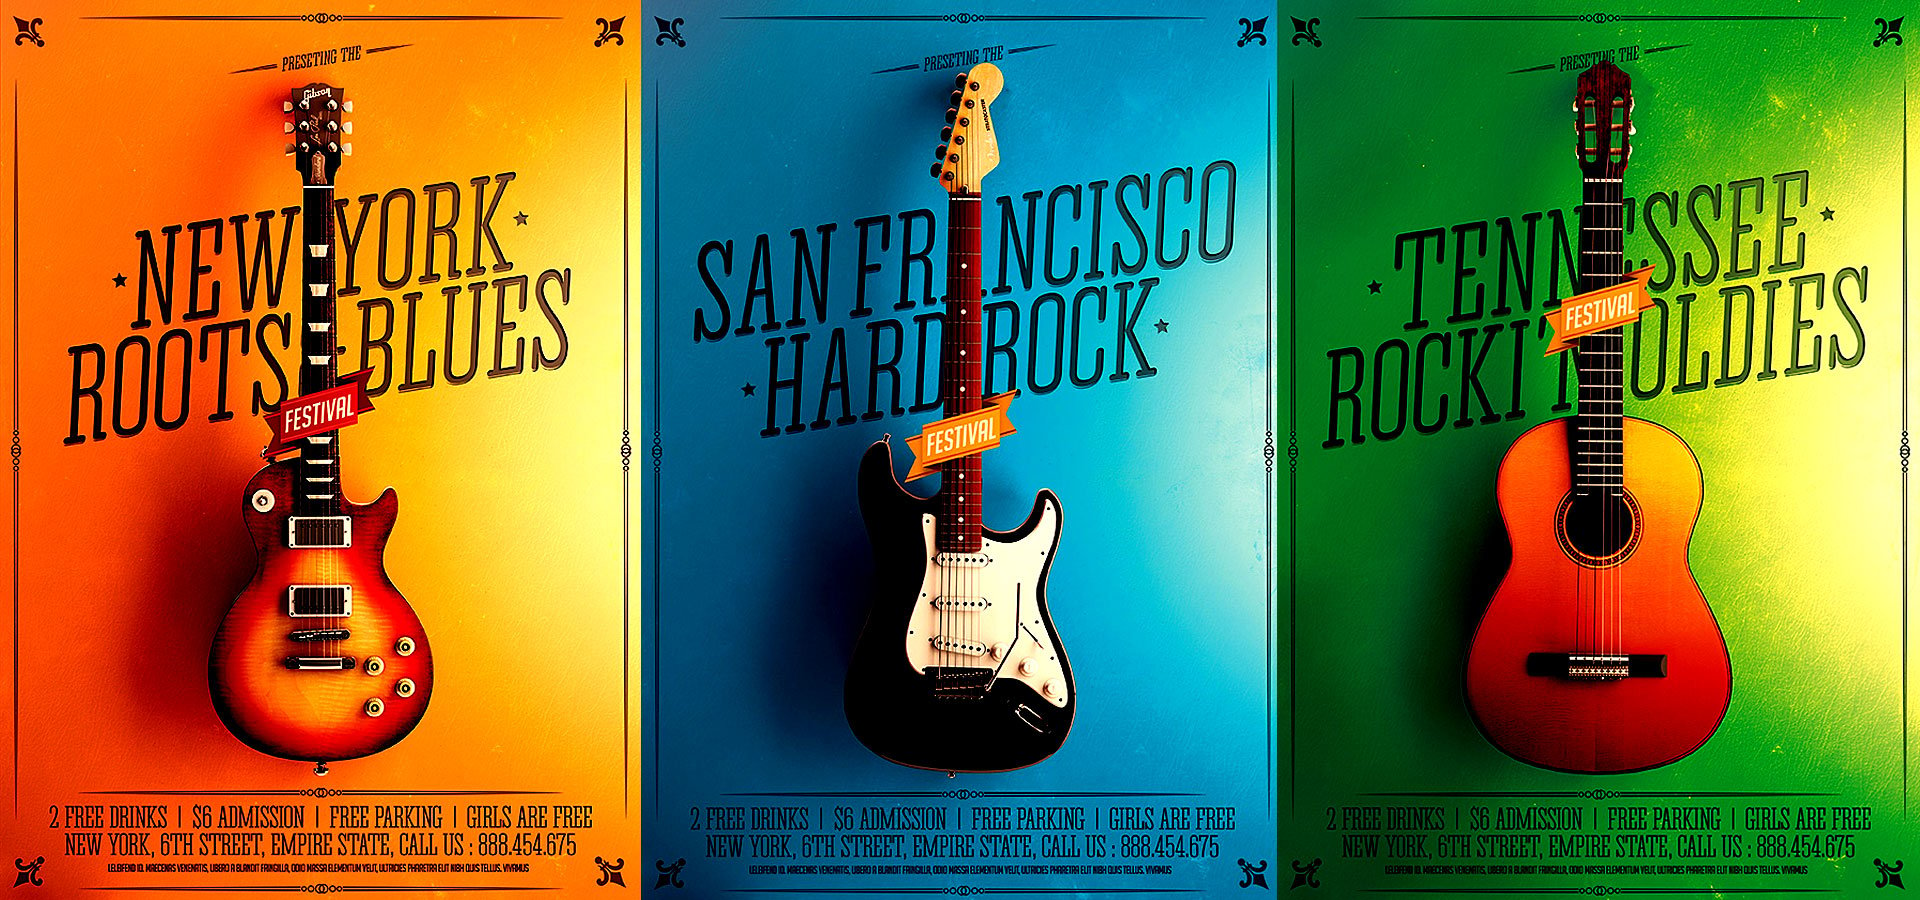 rock concert poster